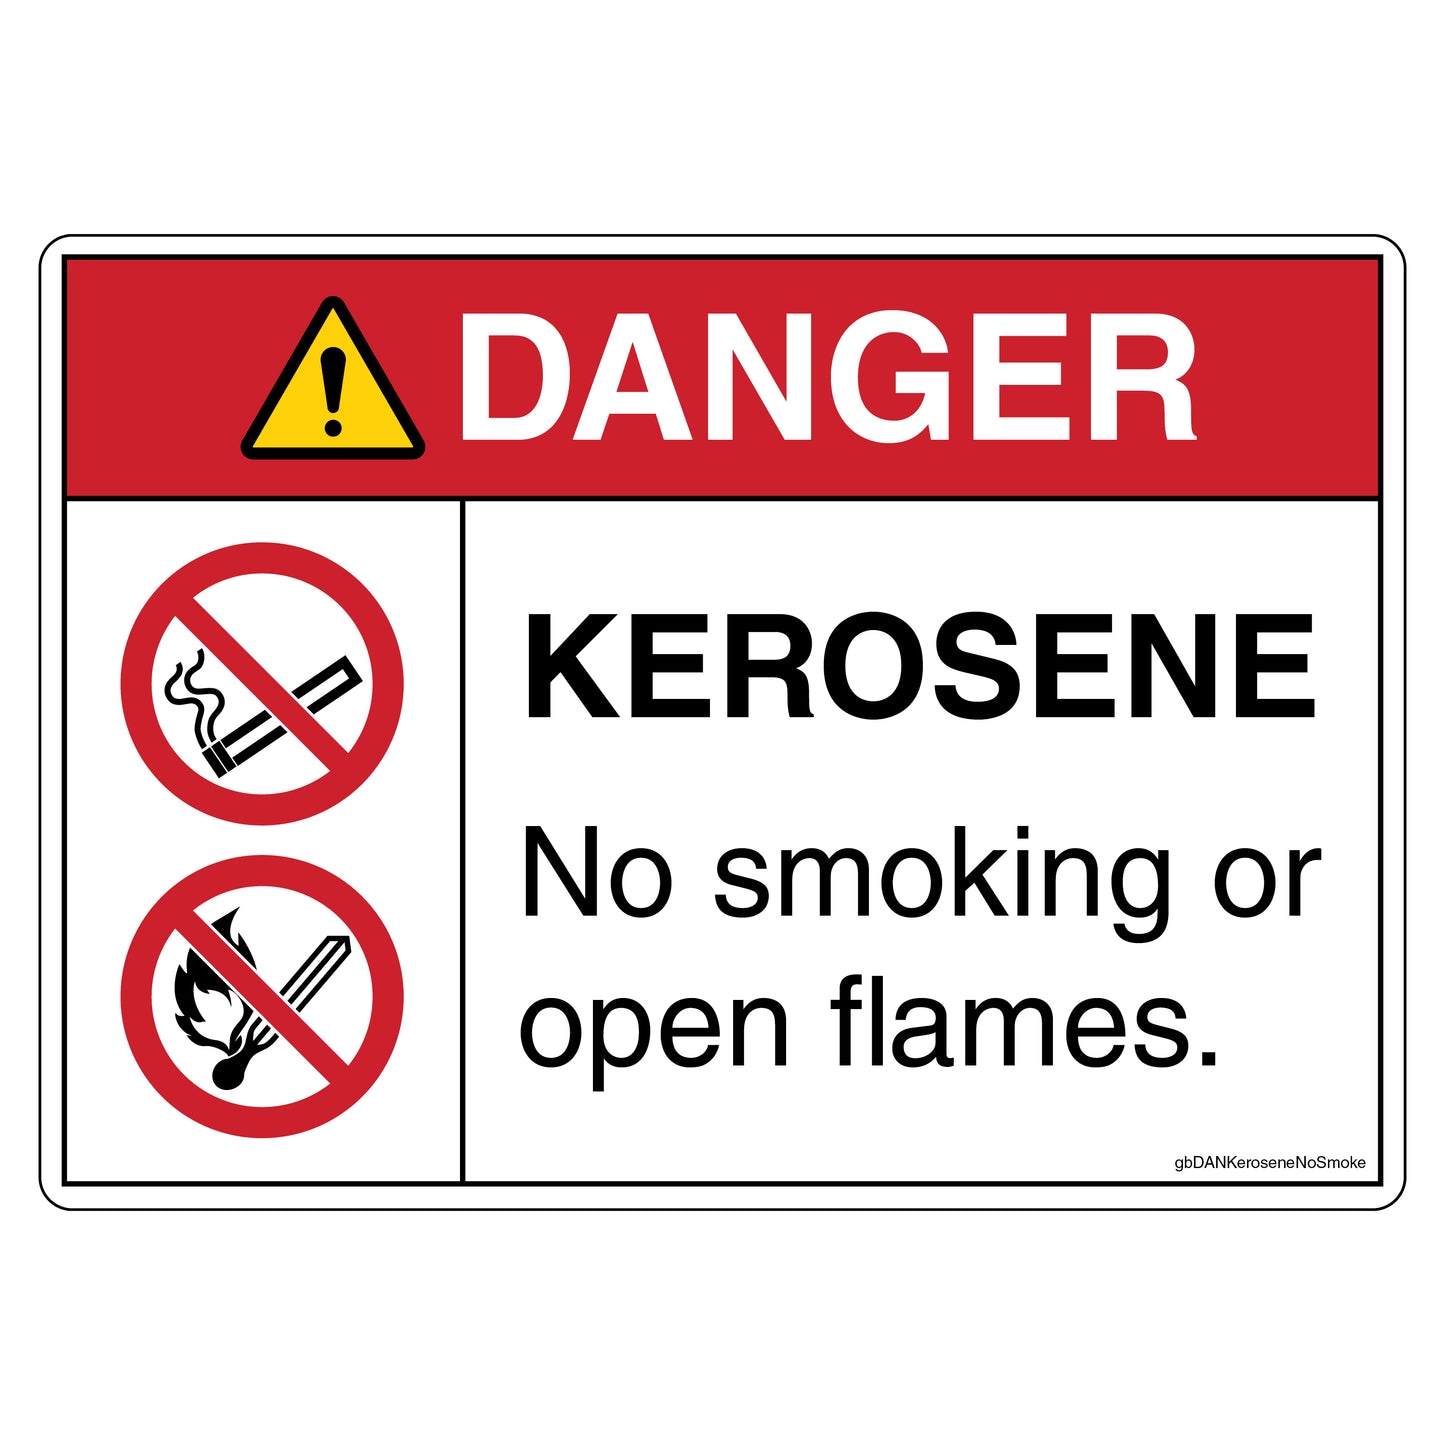 Danger Kerosene No Smoking or Open Flames Decal. 